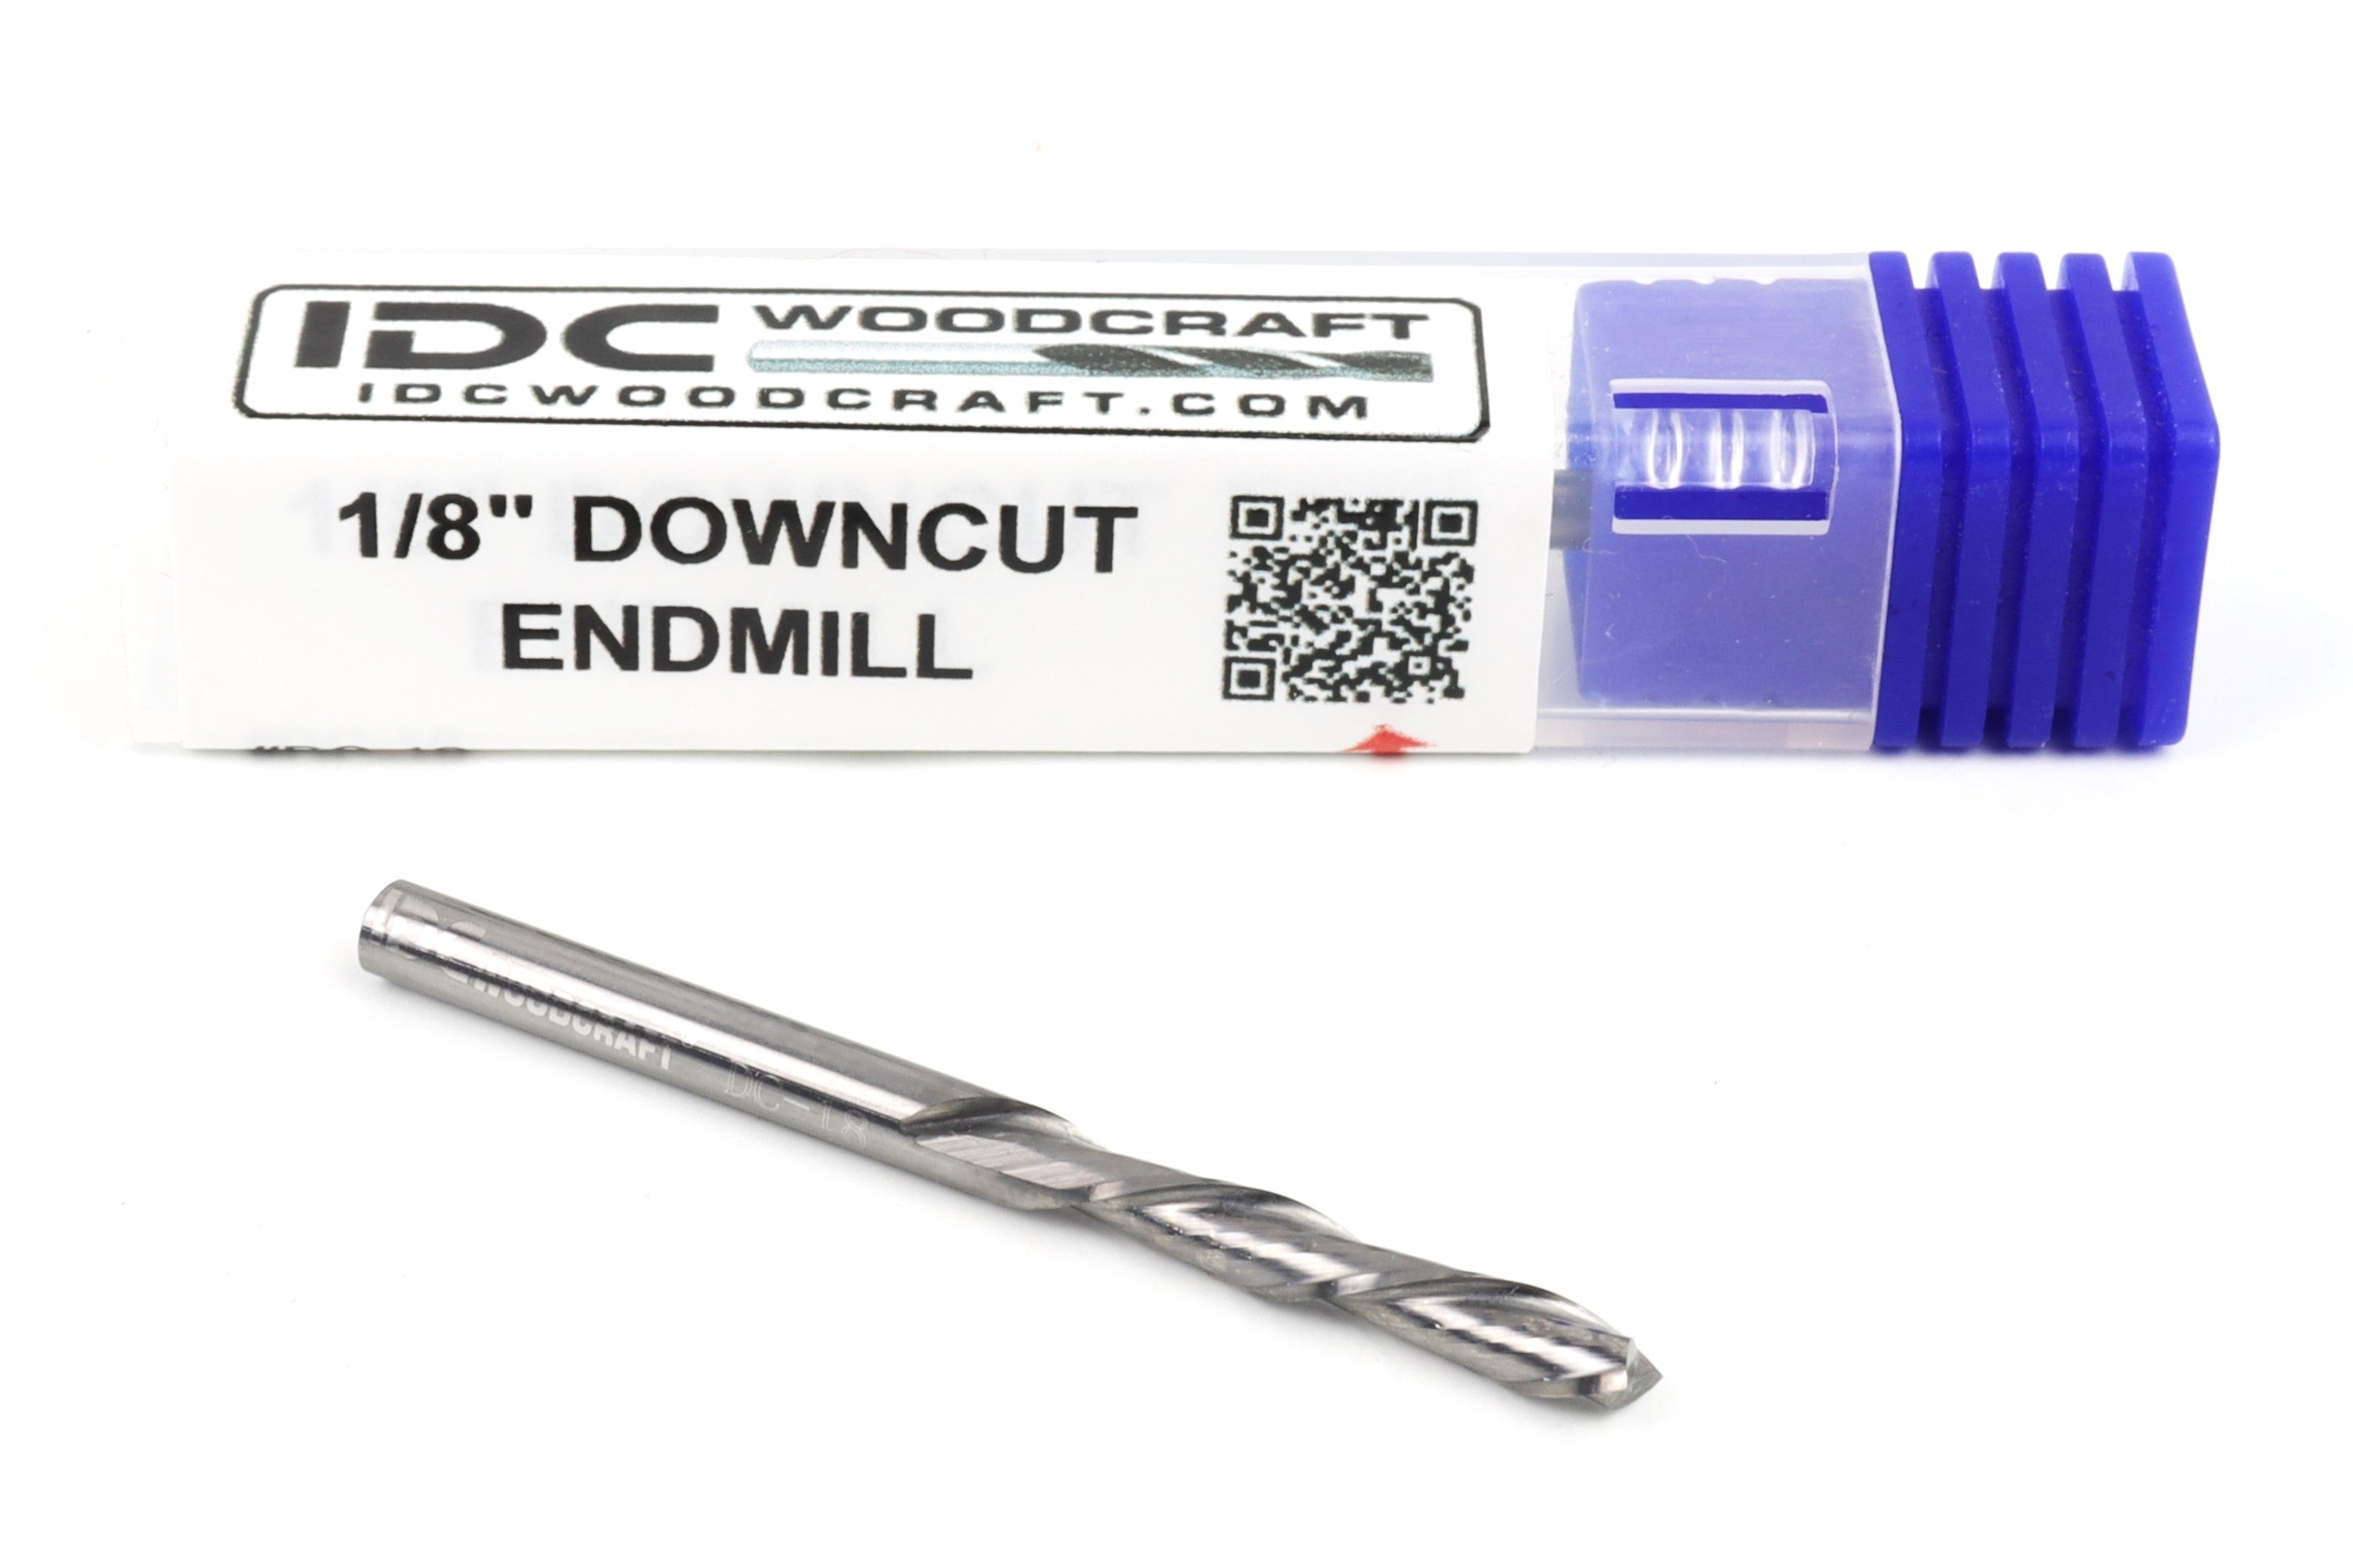 1/8 Down Cut Endmill Bit For CNC Routers, 1/8 Shank